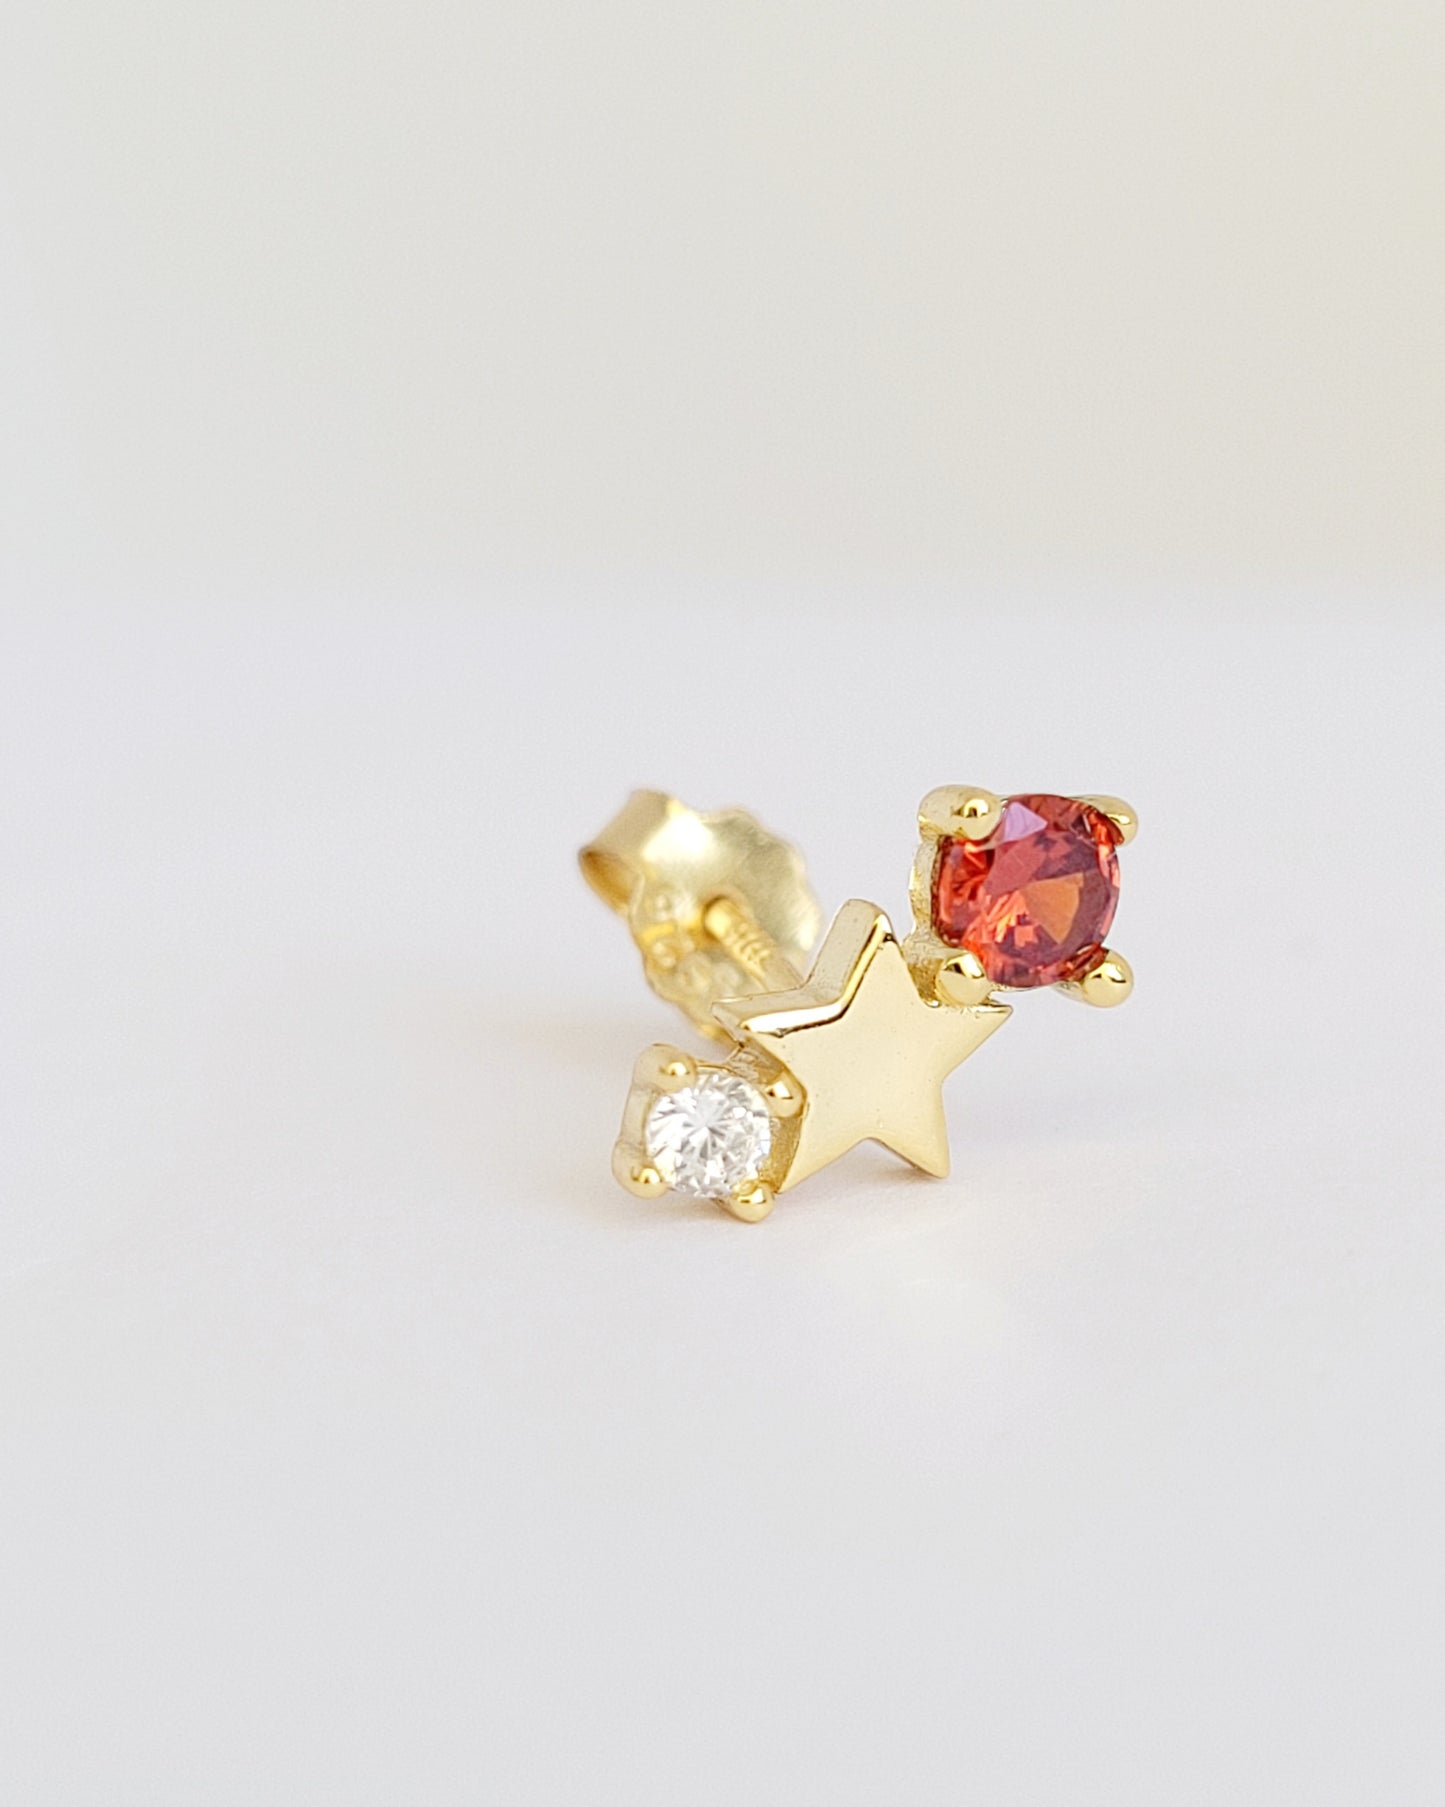 Cancer jewellery: Star Zodiac Constellation Earring